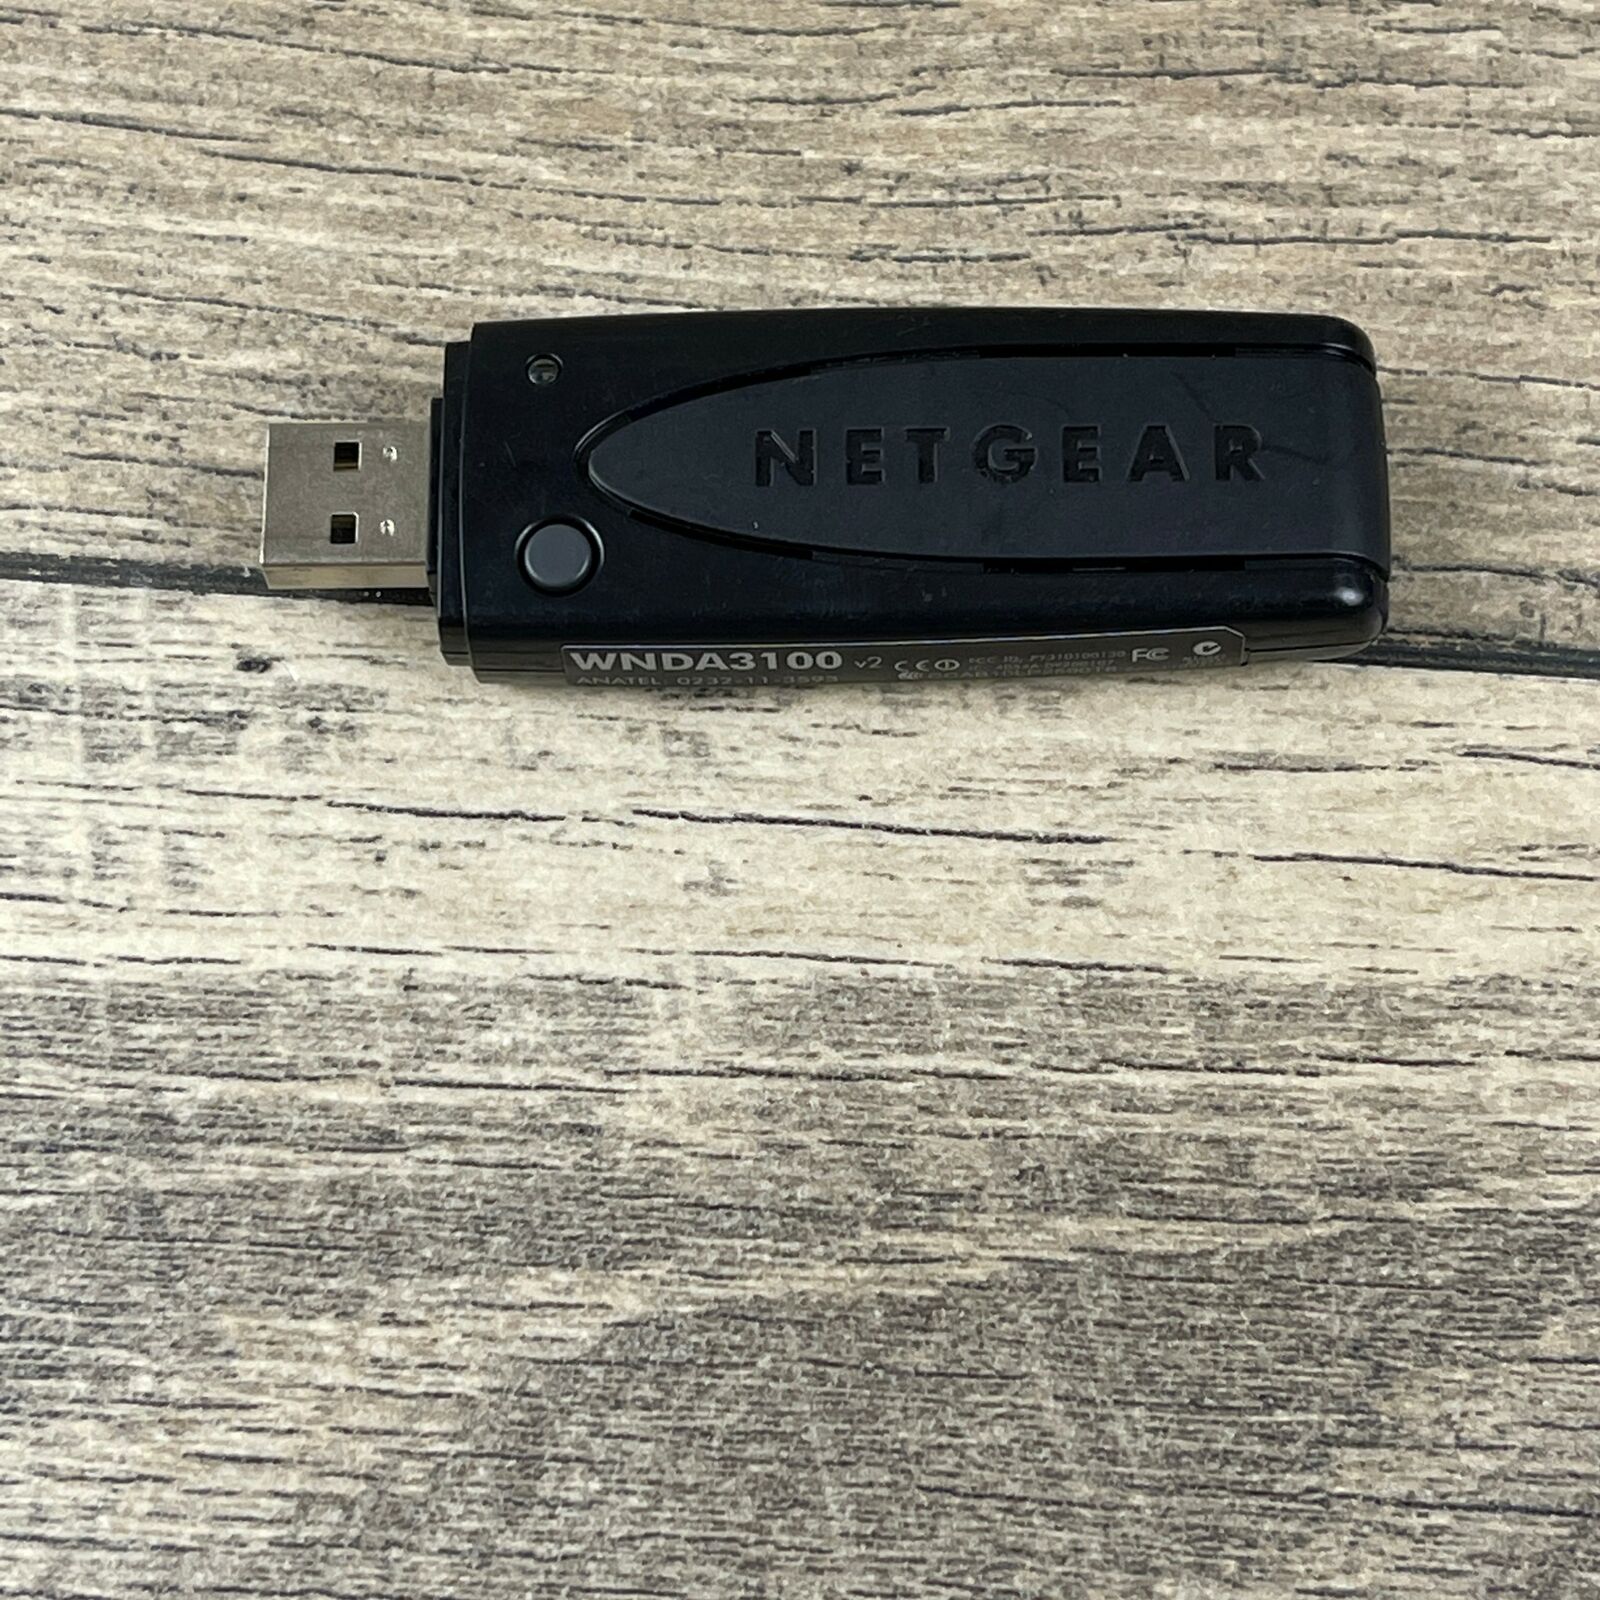 Netgear RangeMax WNDA3100 Black Dual Band Wireless USB WiFi Adapter